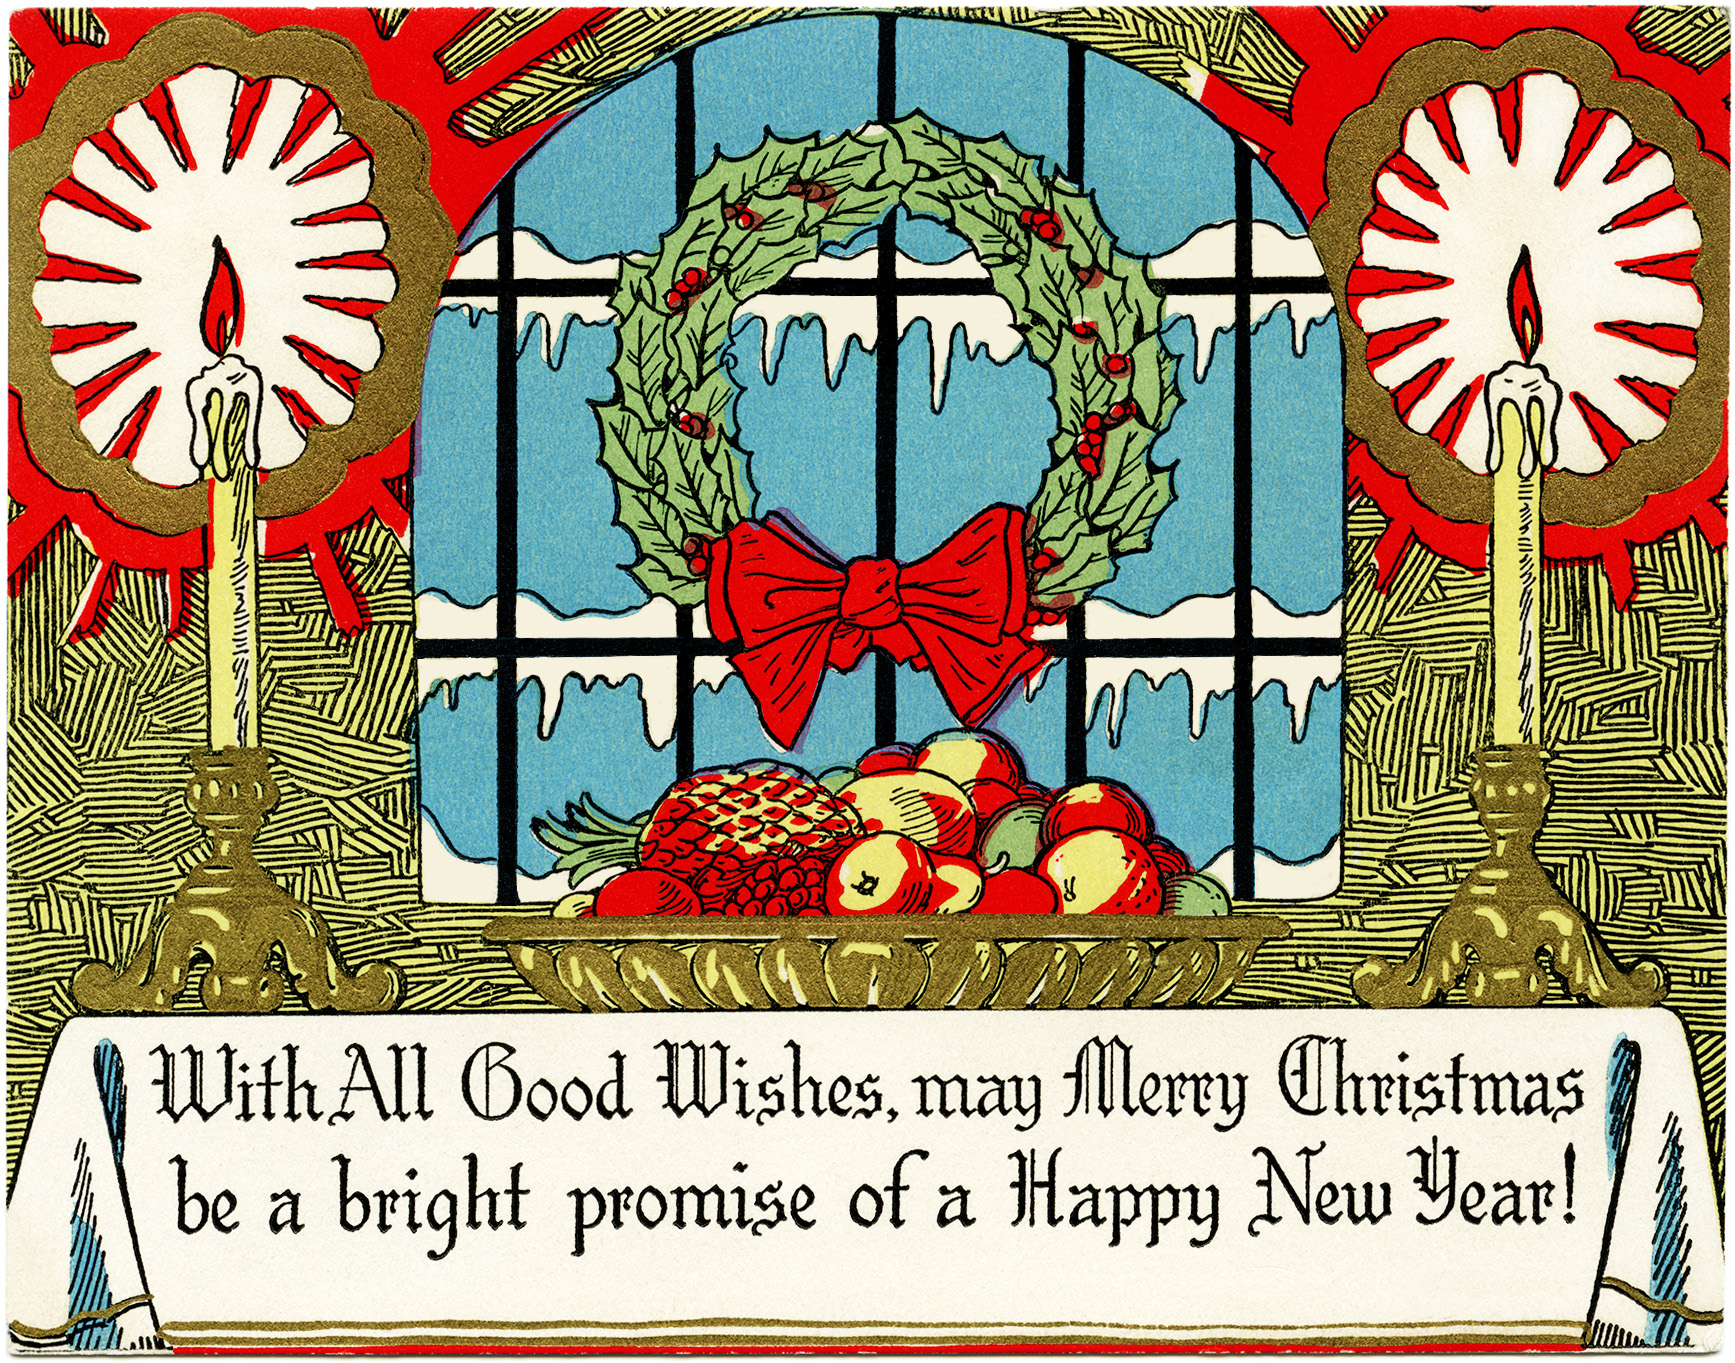 Wreath Candles Fruit Christmas Card   Free Vintage Image   Old Design